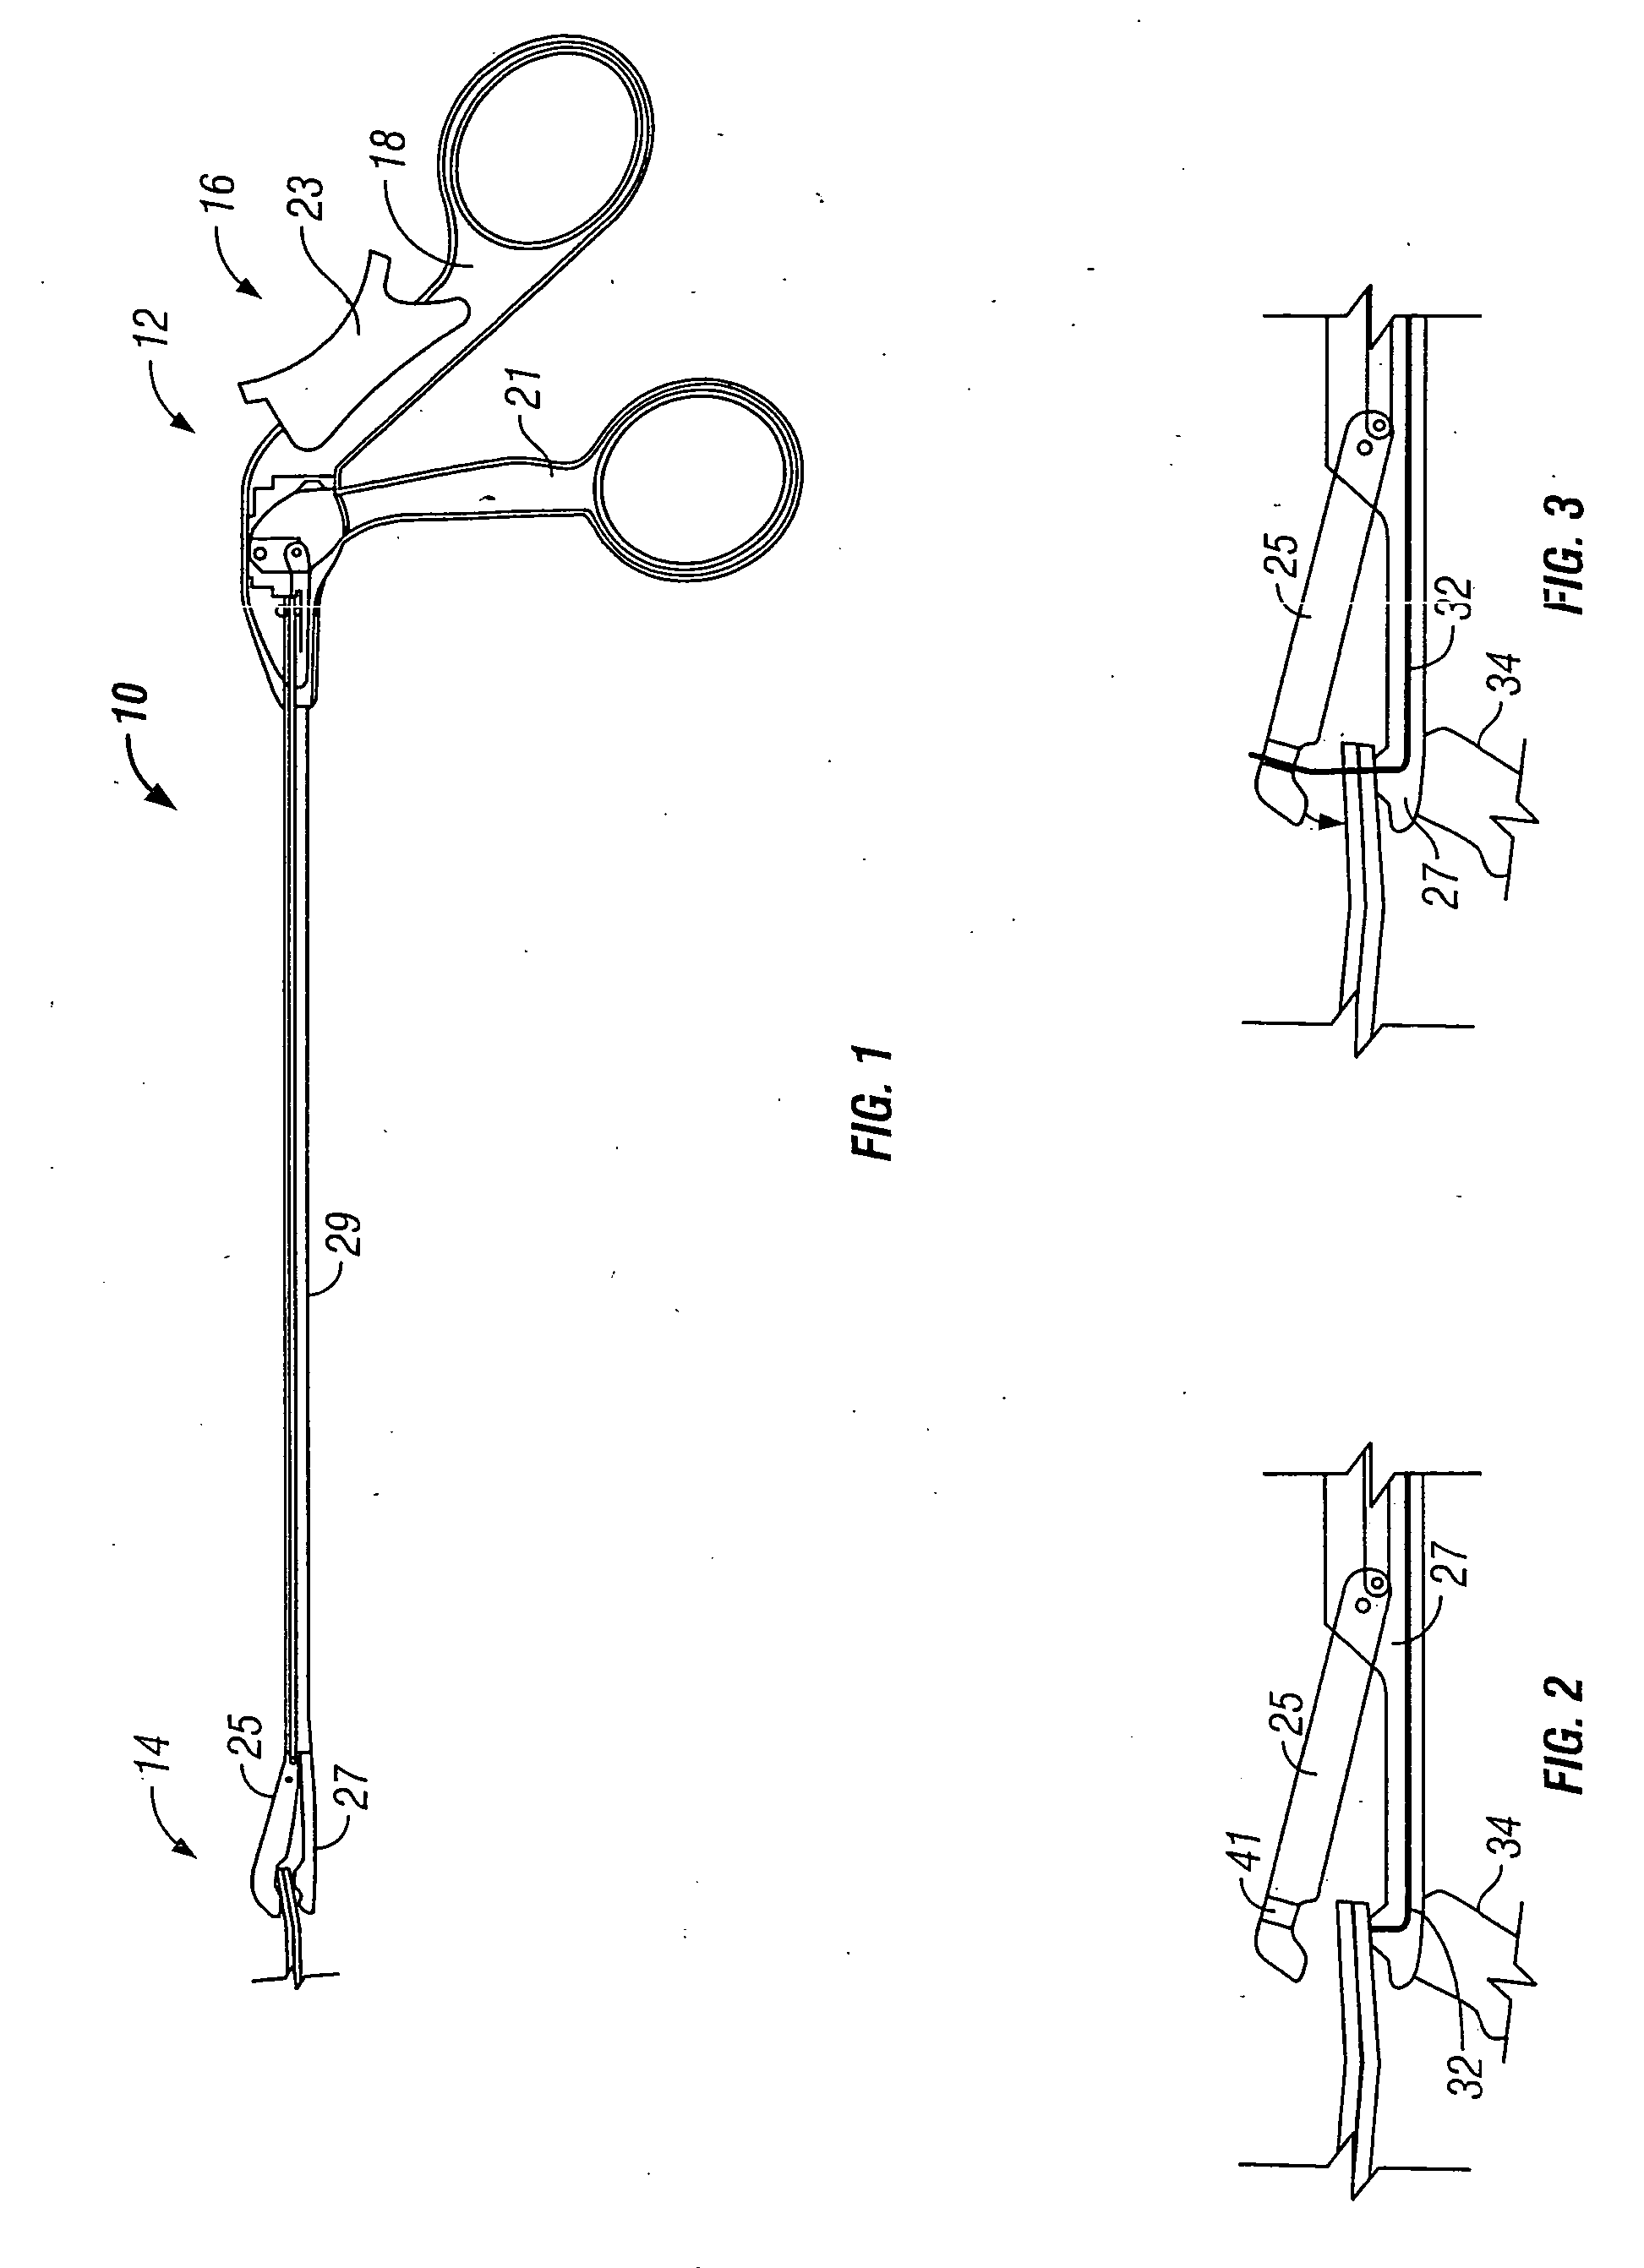 Suturing apparatus and method